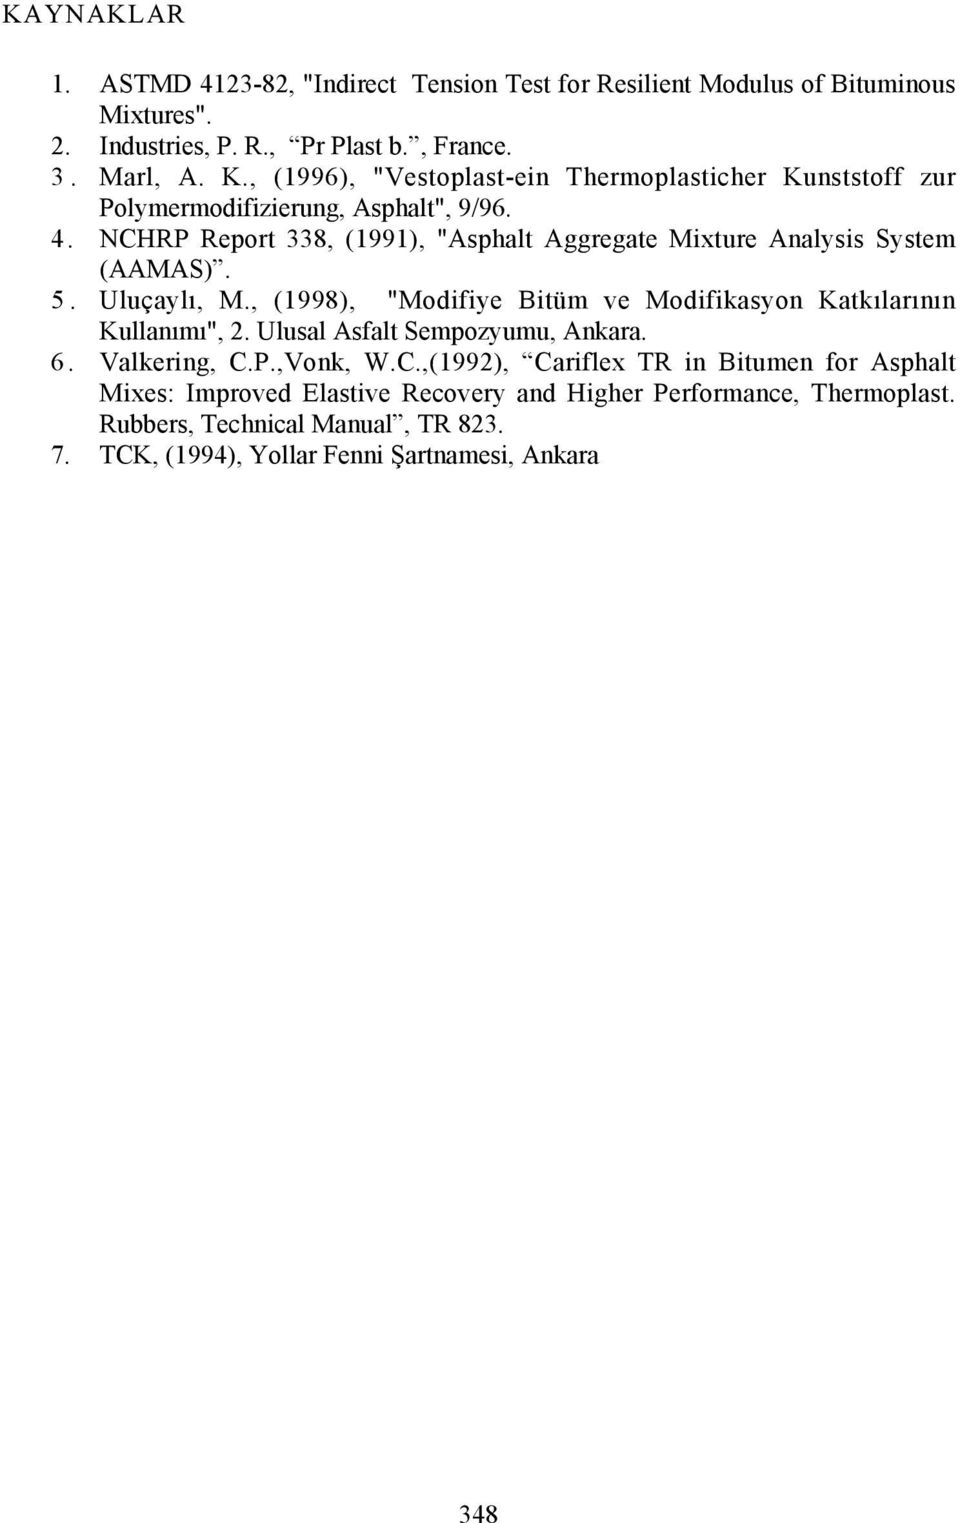 NCHRP Report 338, (1991), "Asphalt Aggregate Mixture Analysis System (AAMAS). 5. Uluçaylõ, M., (1998), "Modifiye Bitüm ve Modifikasyon Katkõlarõnõn Kullanõmõ", 2.